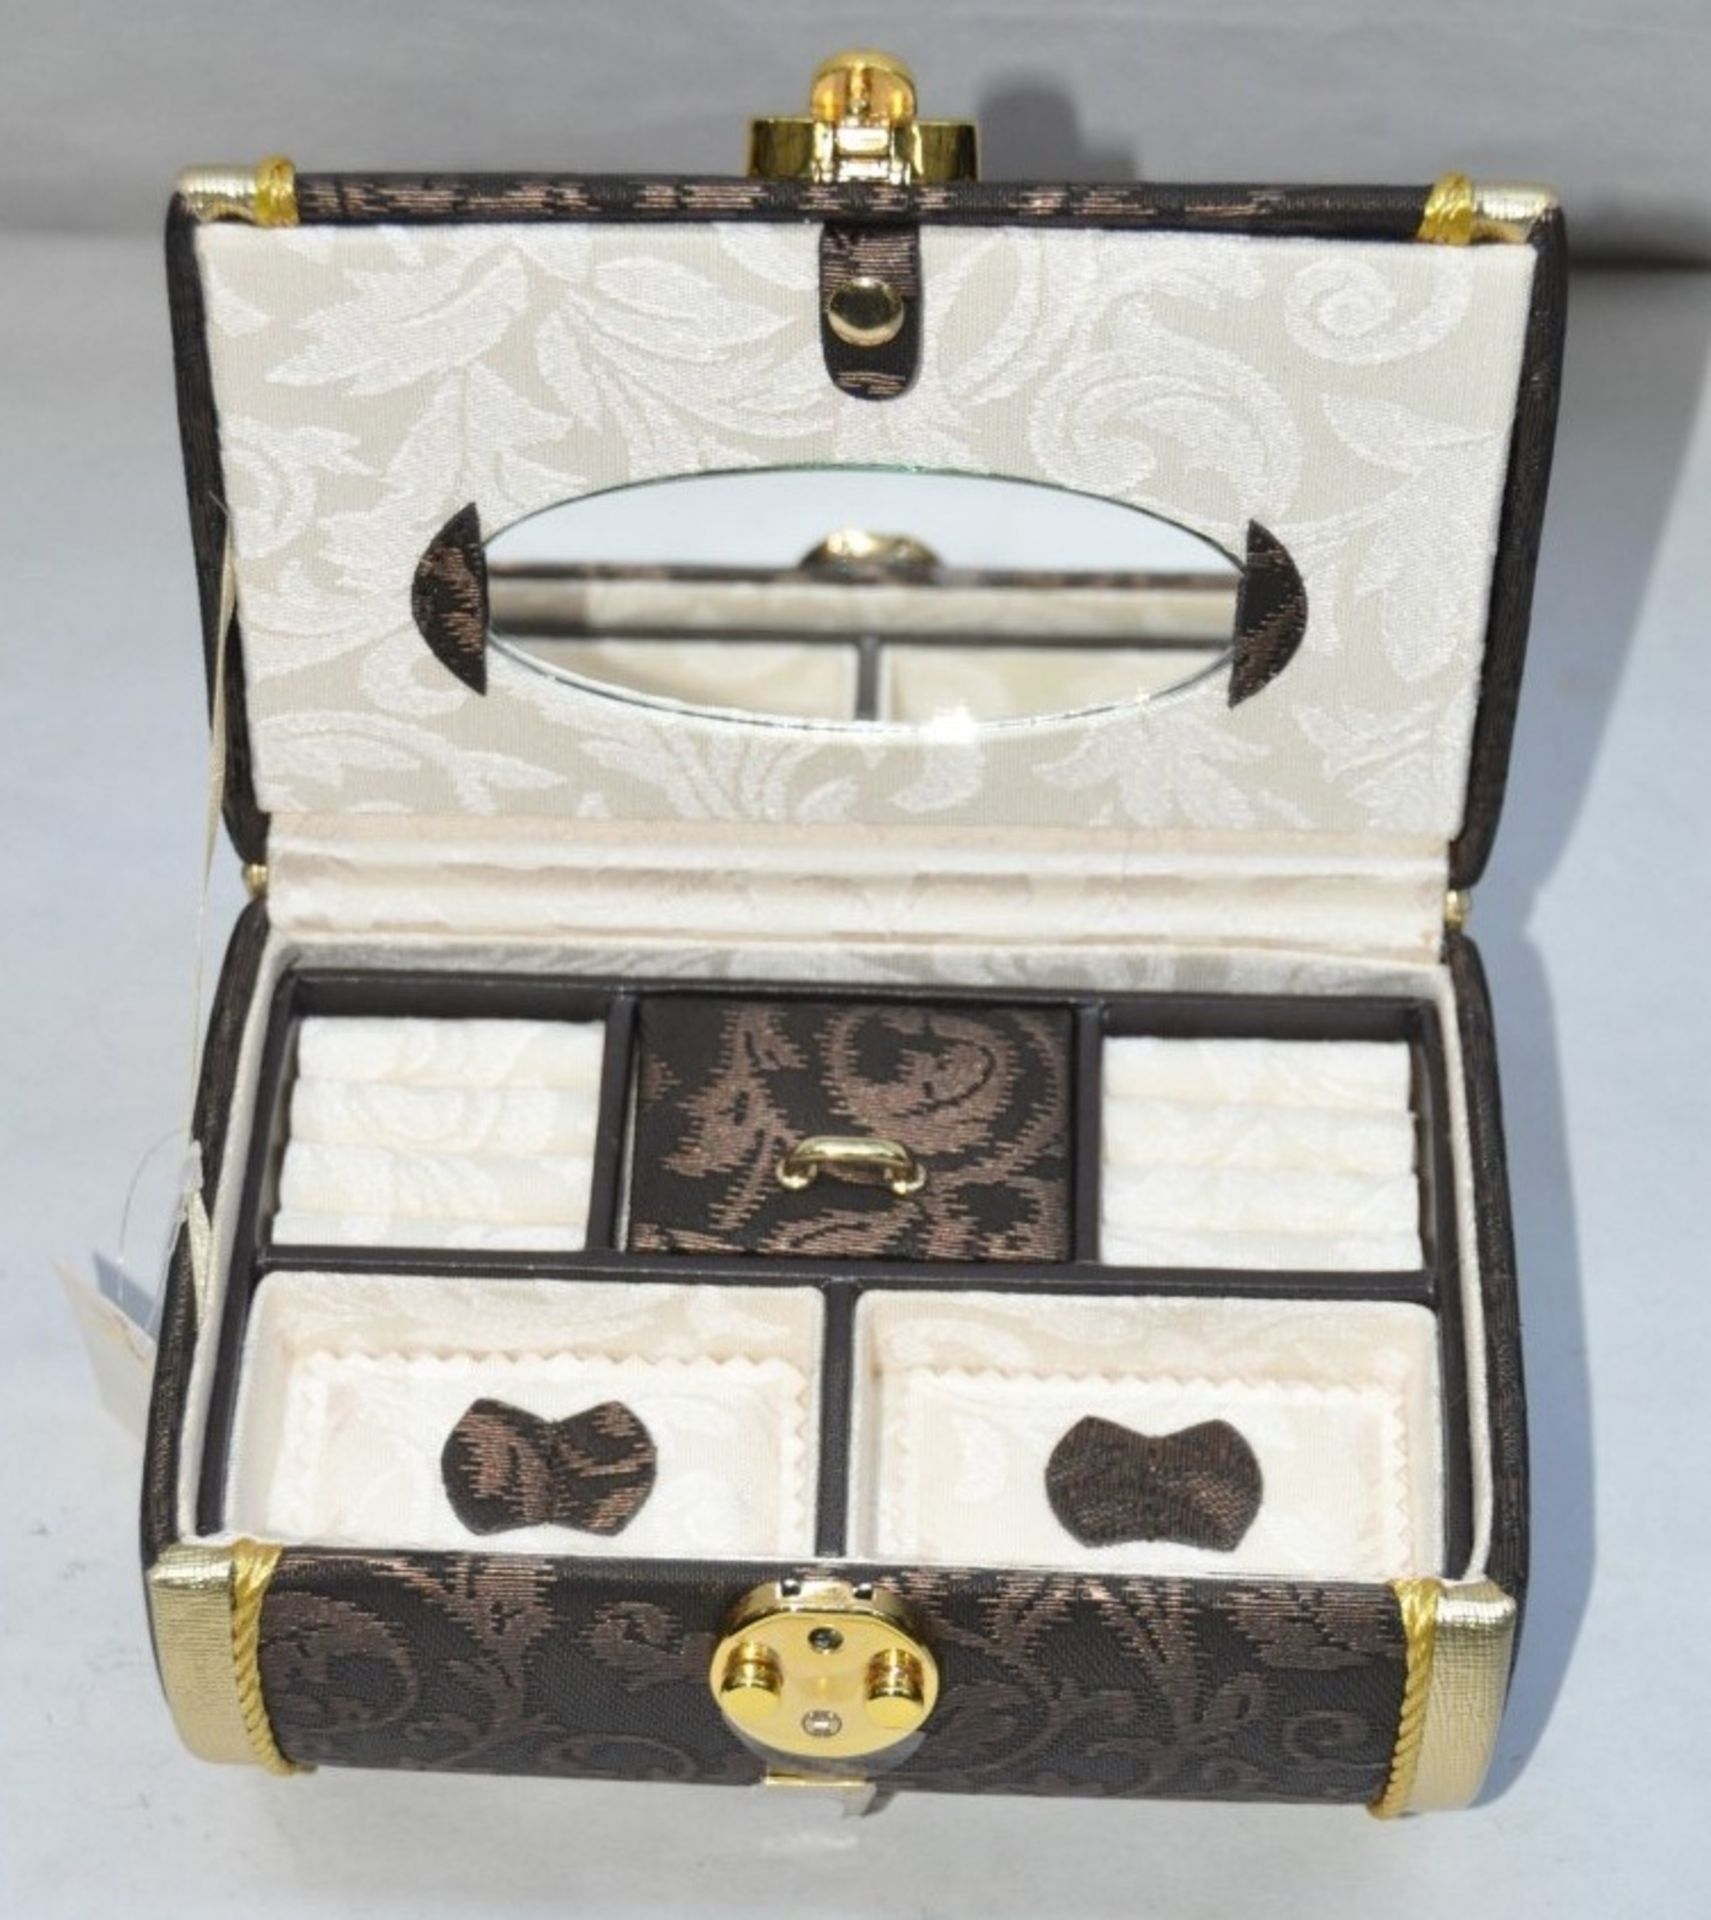 1 x "AB Collezioni" Italian Luxury Travelling Jewellery Box (34234M) - Ref LT065 – Lockable, With - Image 2 of 5